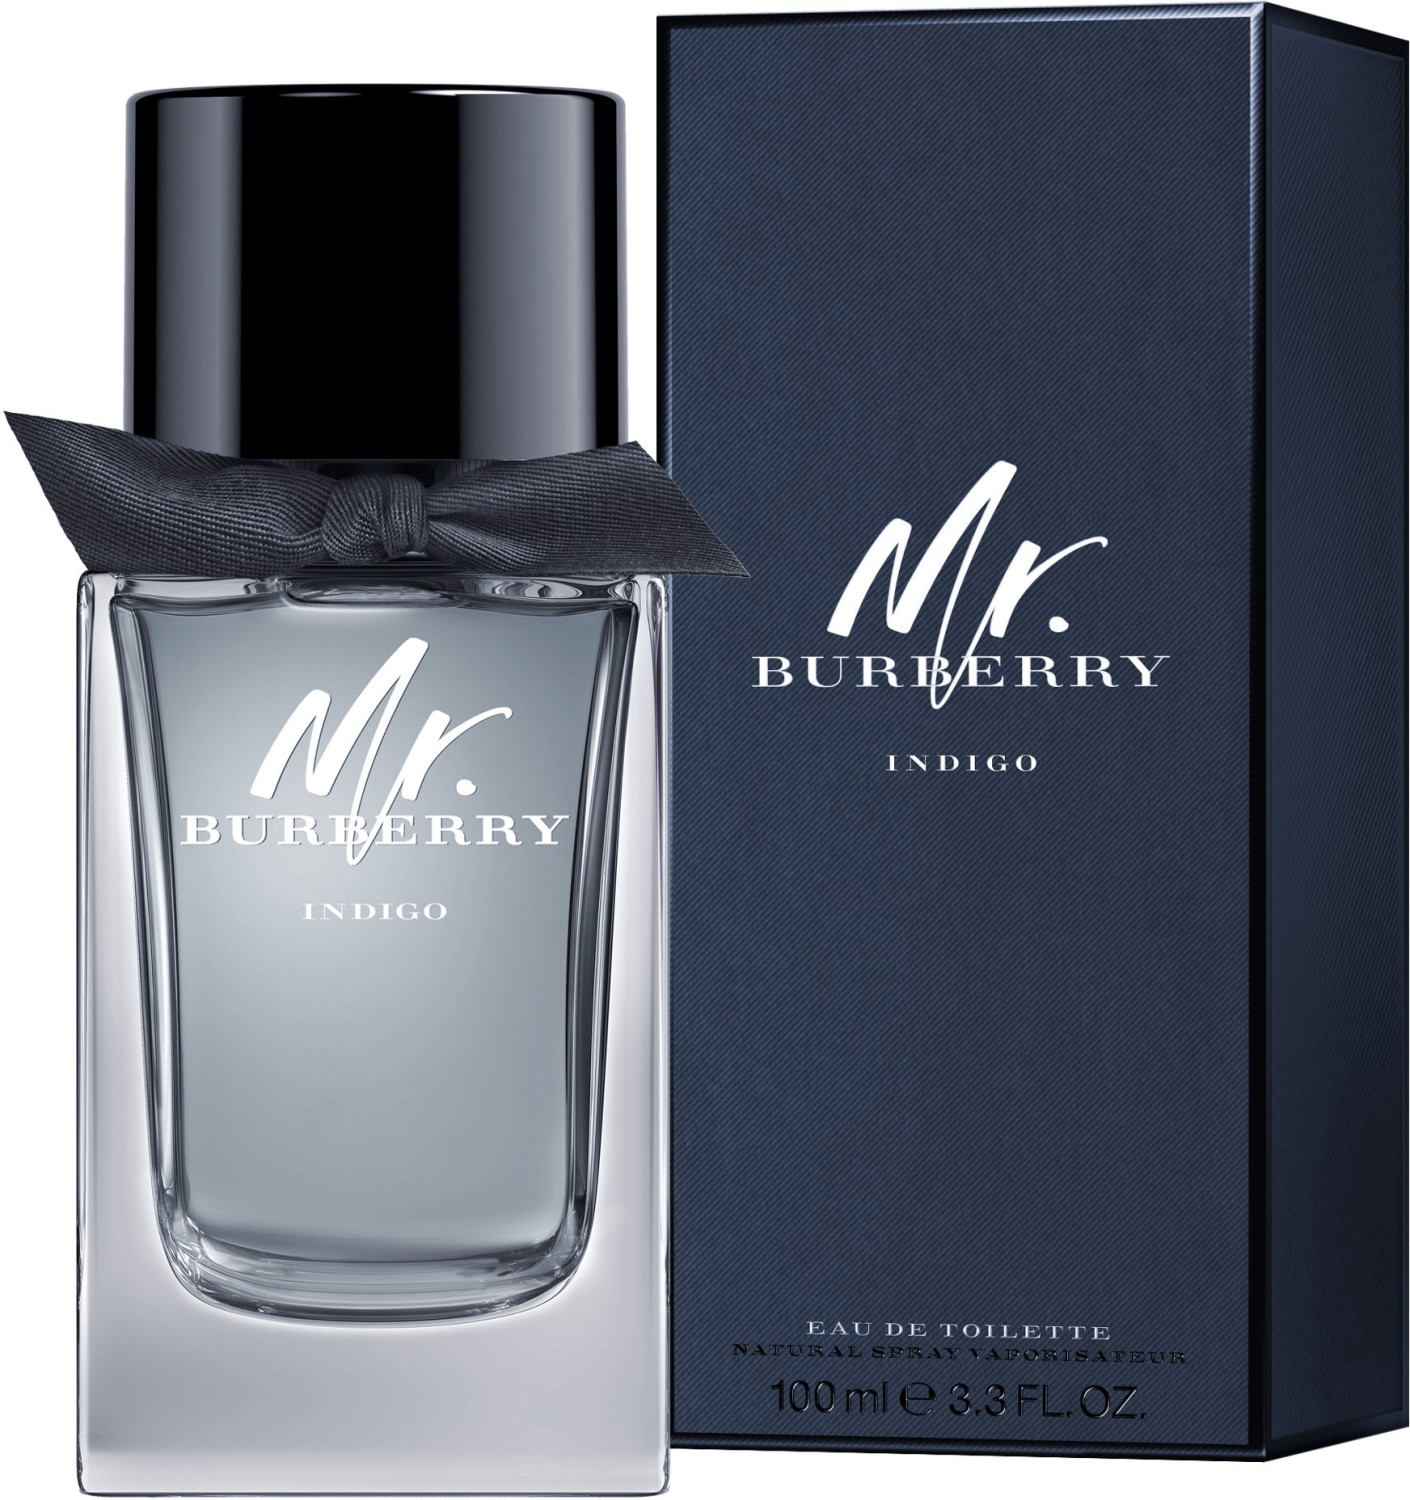 Photos - Men's Fragrance Burberry Mr.  Indigo Eau de Toilette  (100ml)